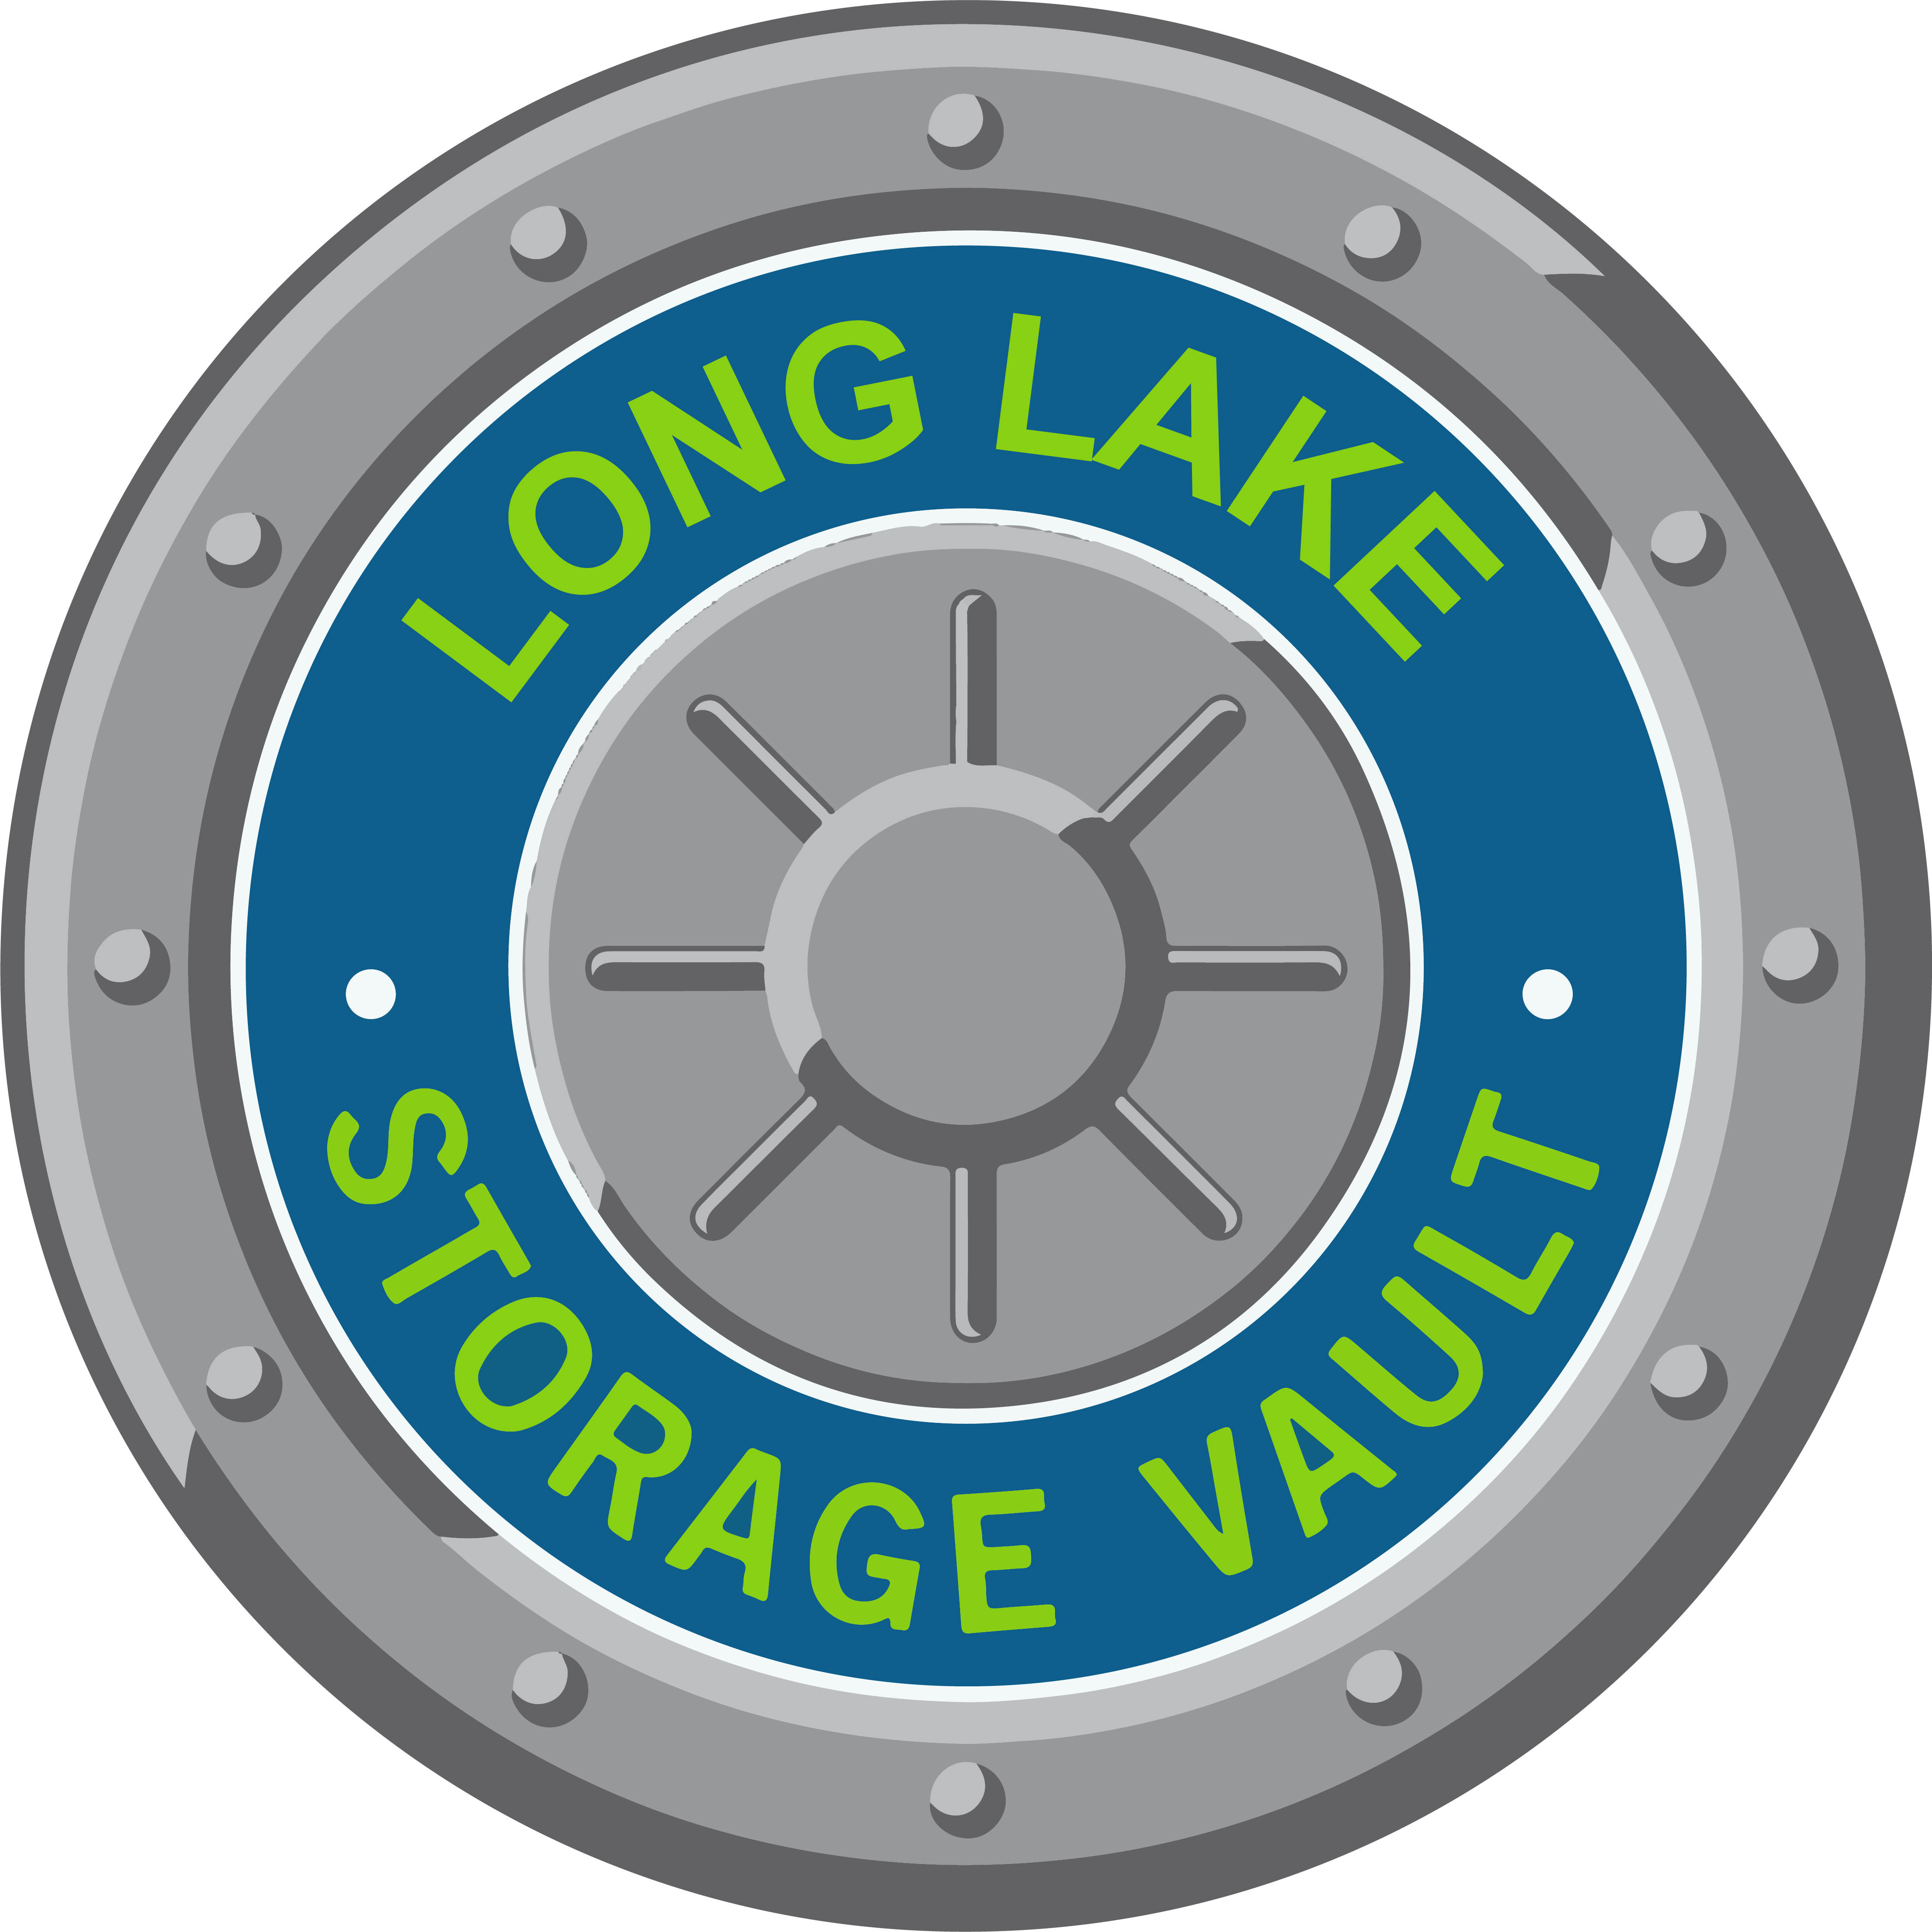 Long Lake Storage Units in Traverse City, MI 49685